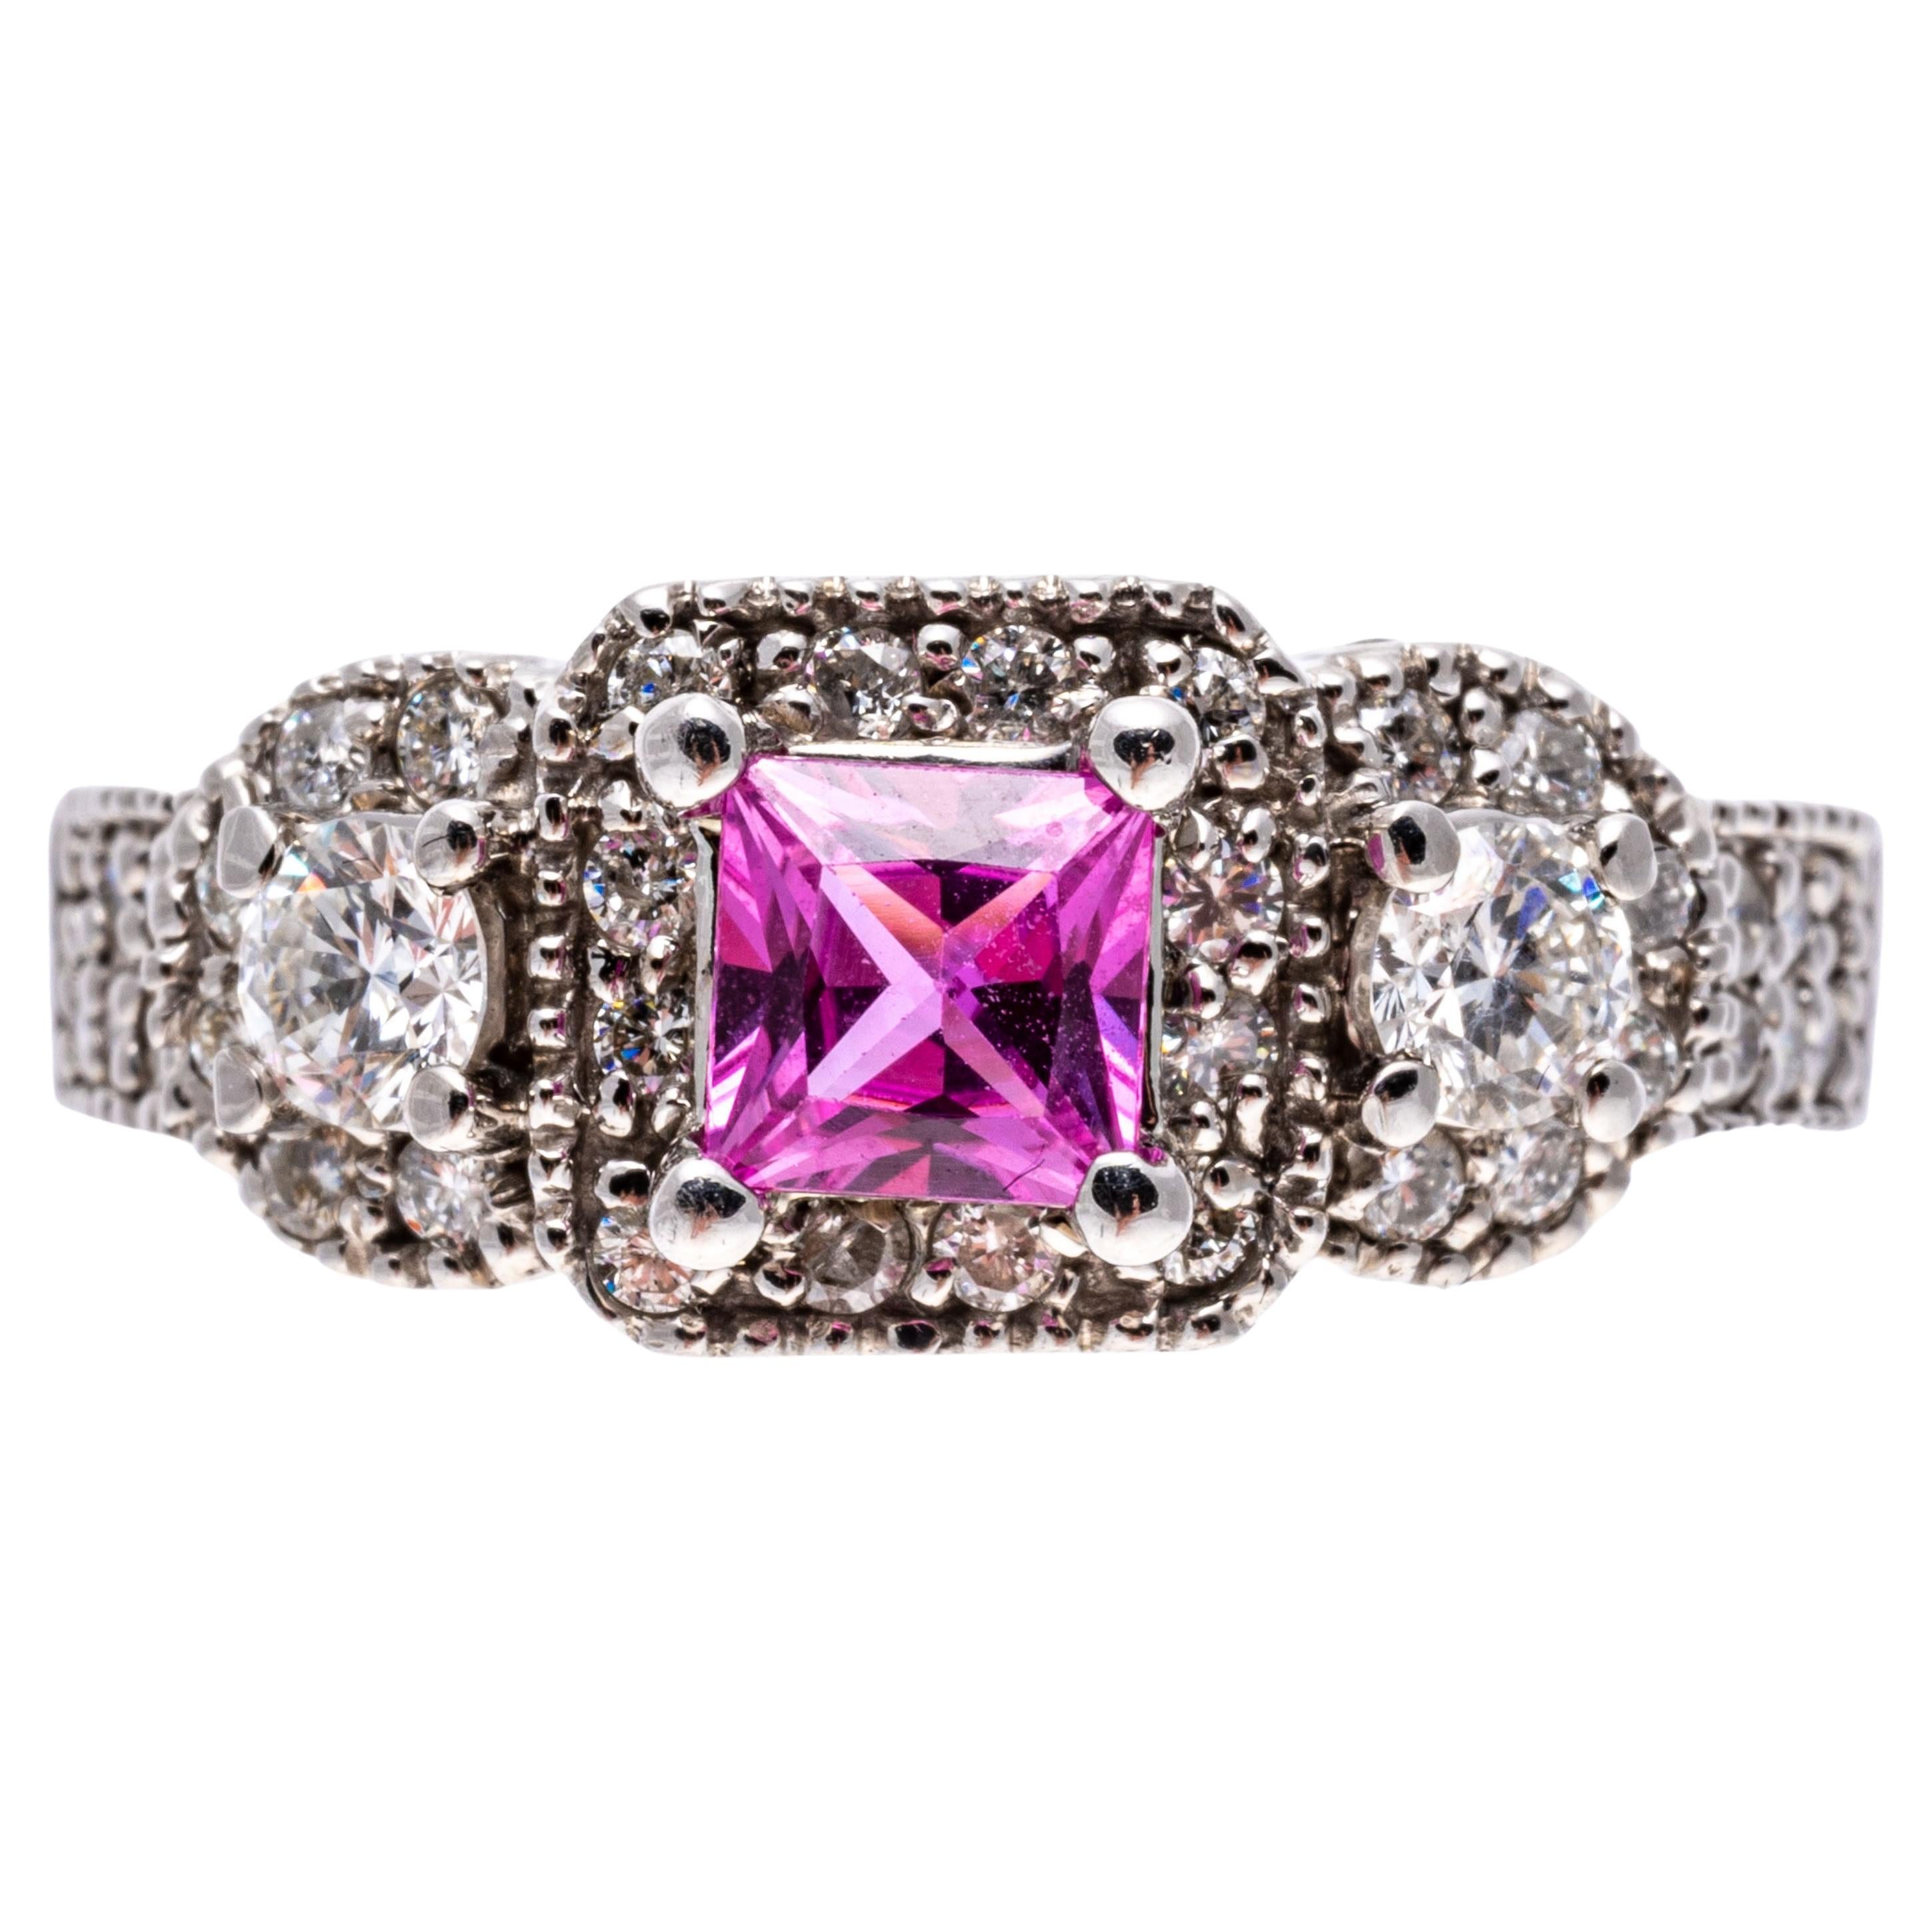 14k White Gold Beautiful Ornate Pink Sapphire and Diamond Halo Ring